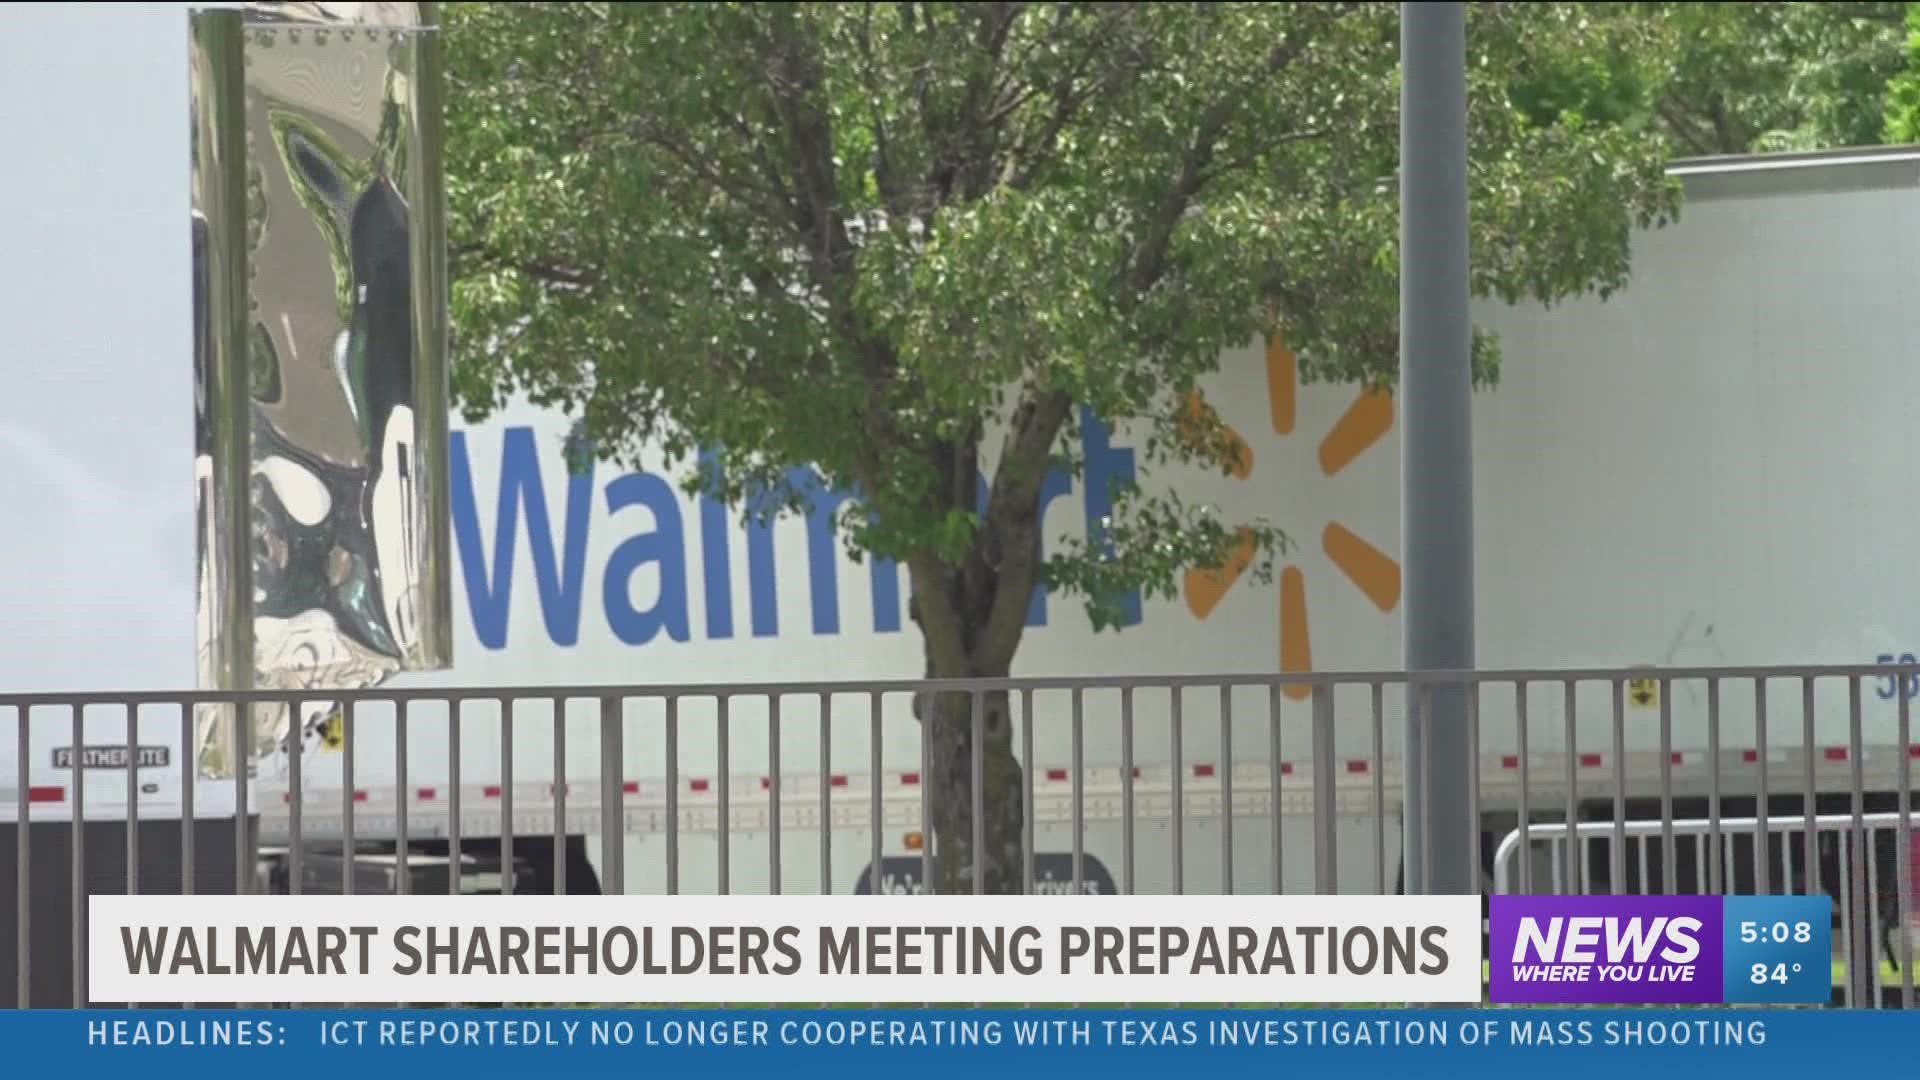 Walmart Shareholders Meeting impacting traffic this week